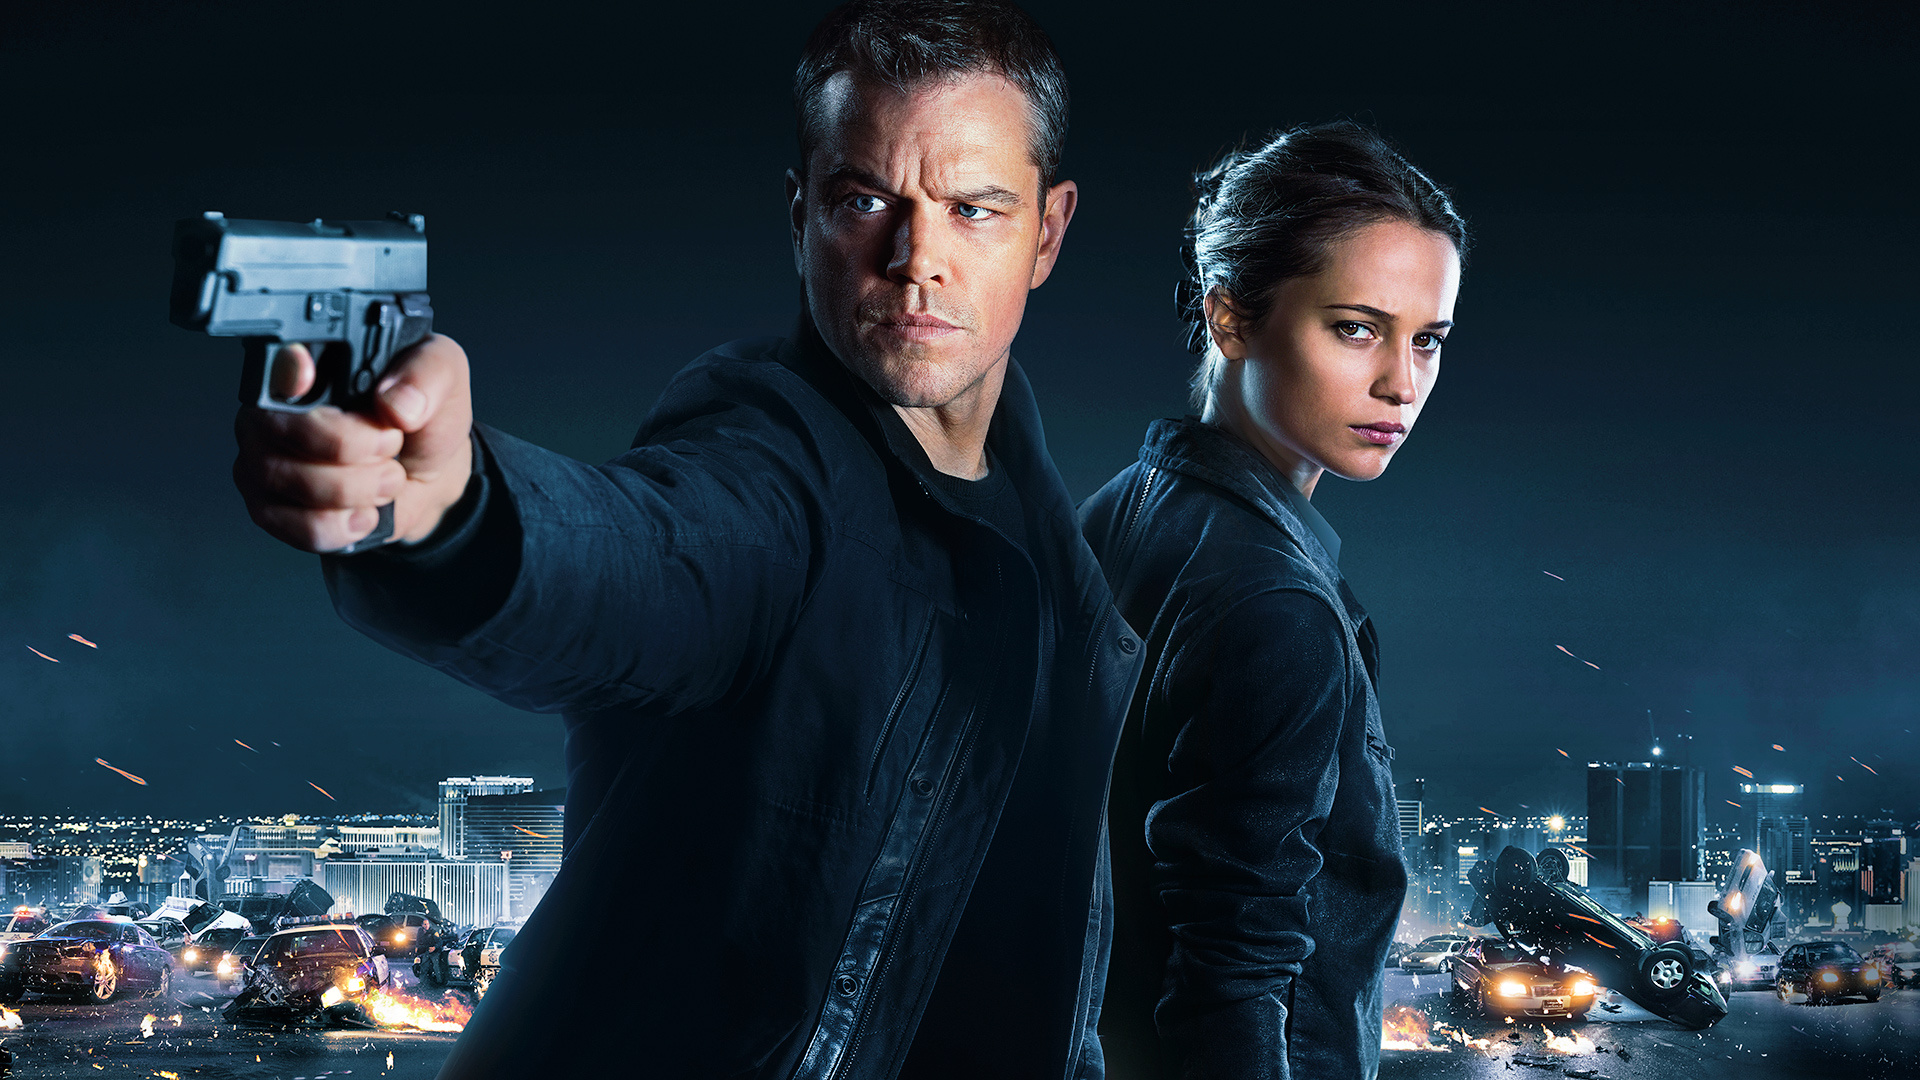 The Bourne: Matt Damon as a former CIA assassin, Alicia Vikander as Heather Lee. 1920x1080 Full HD Wallpaper.